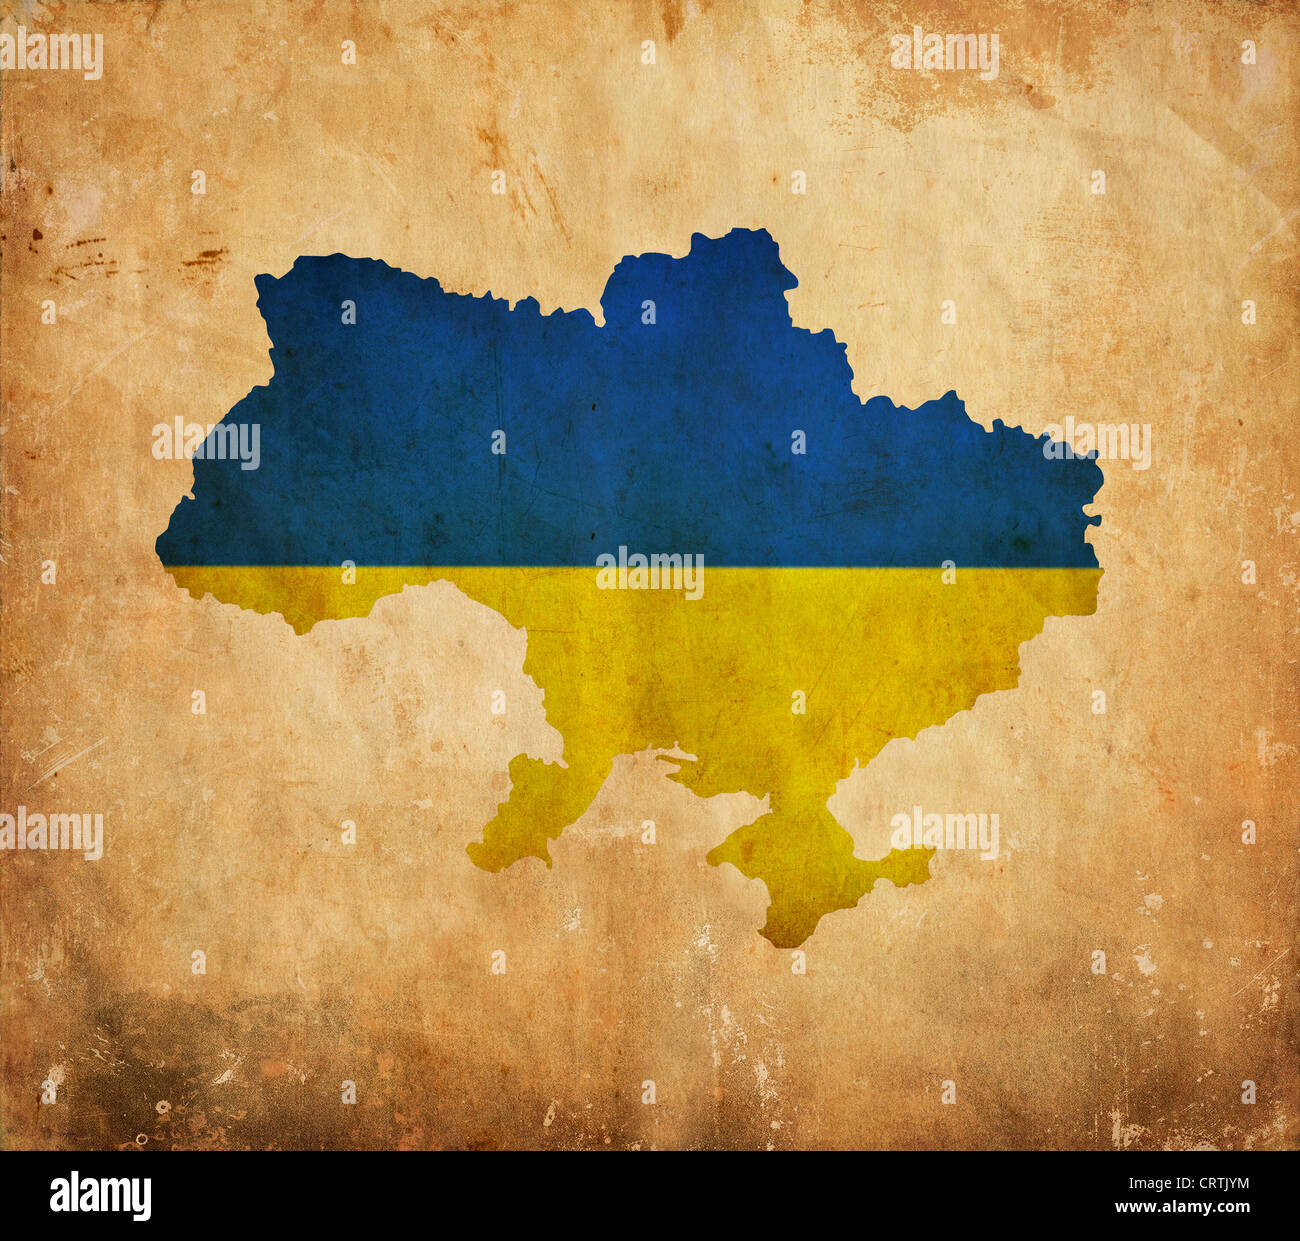 Vintage map of Ukraine on grunge paper Stock Photo